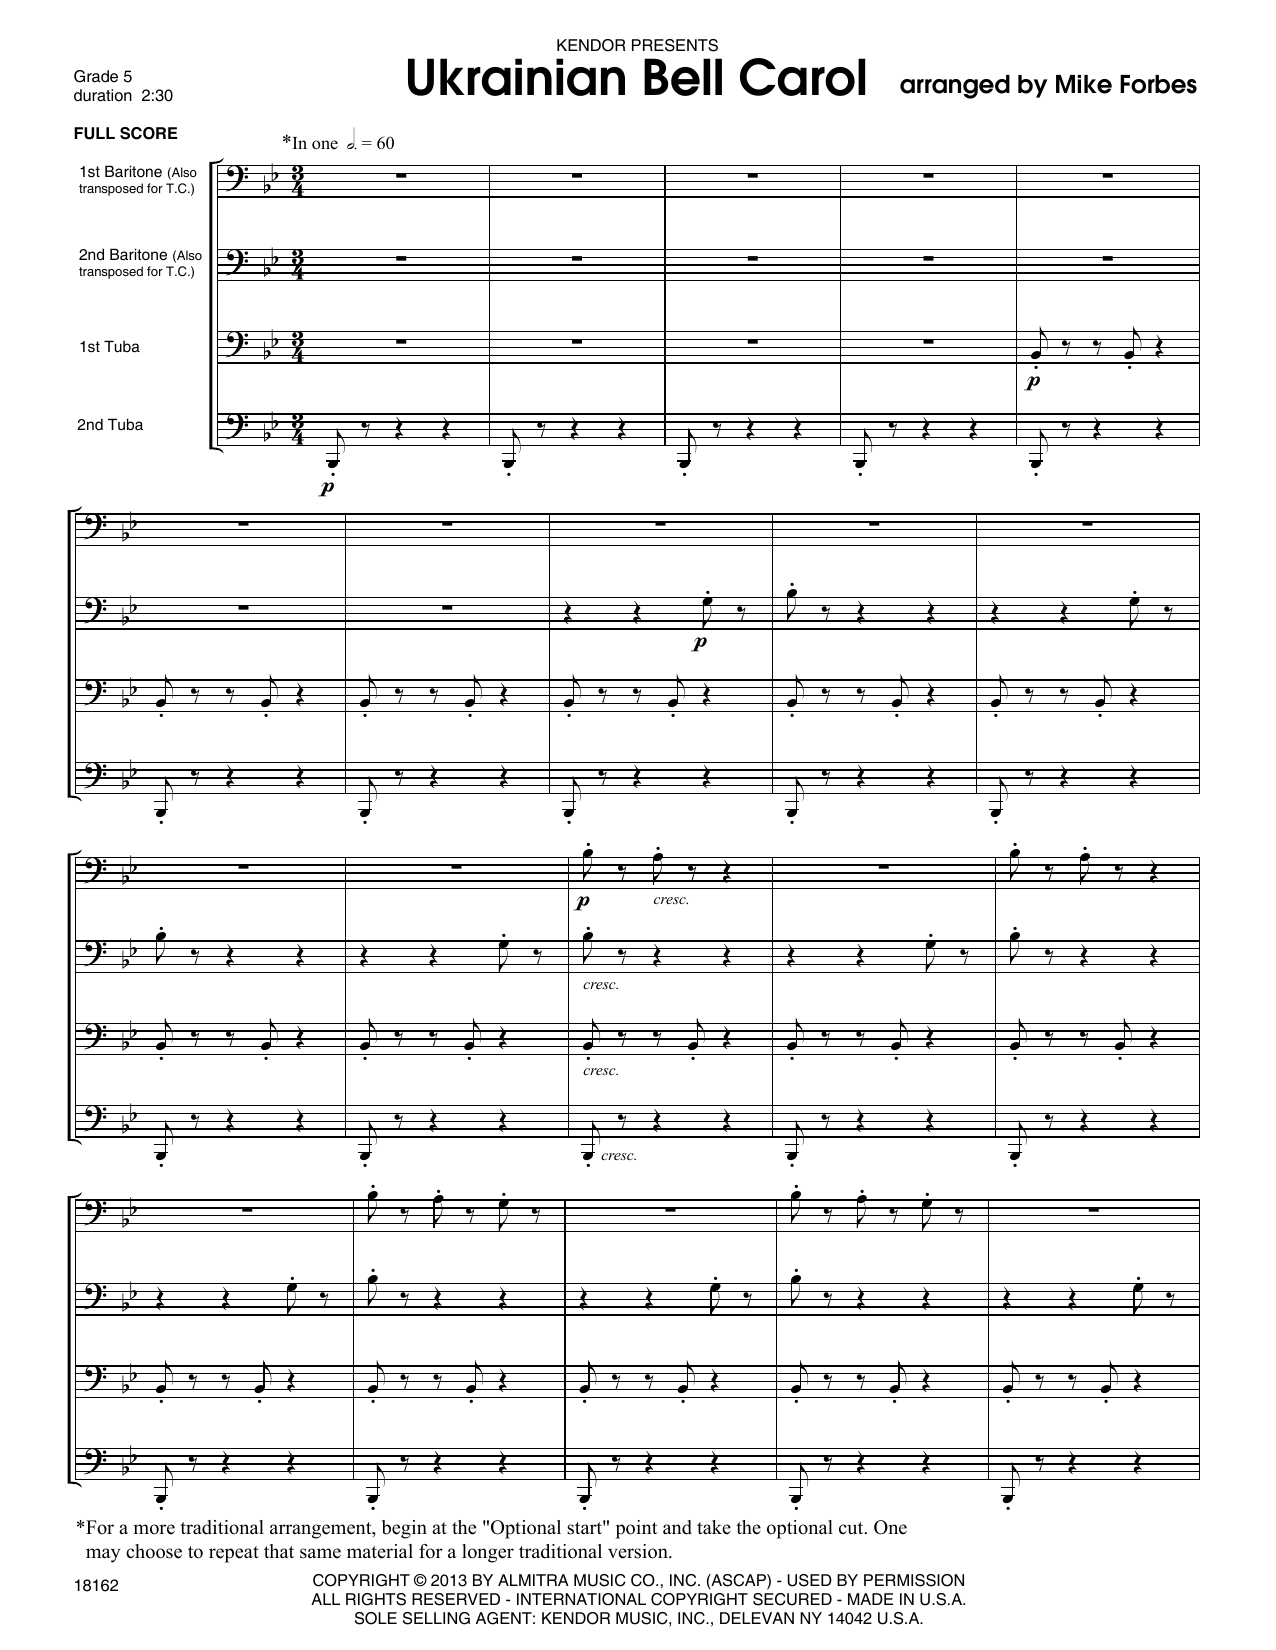 Download Michael Forbes Ukrainian Bell Carol - Full Score Sheet Music